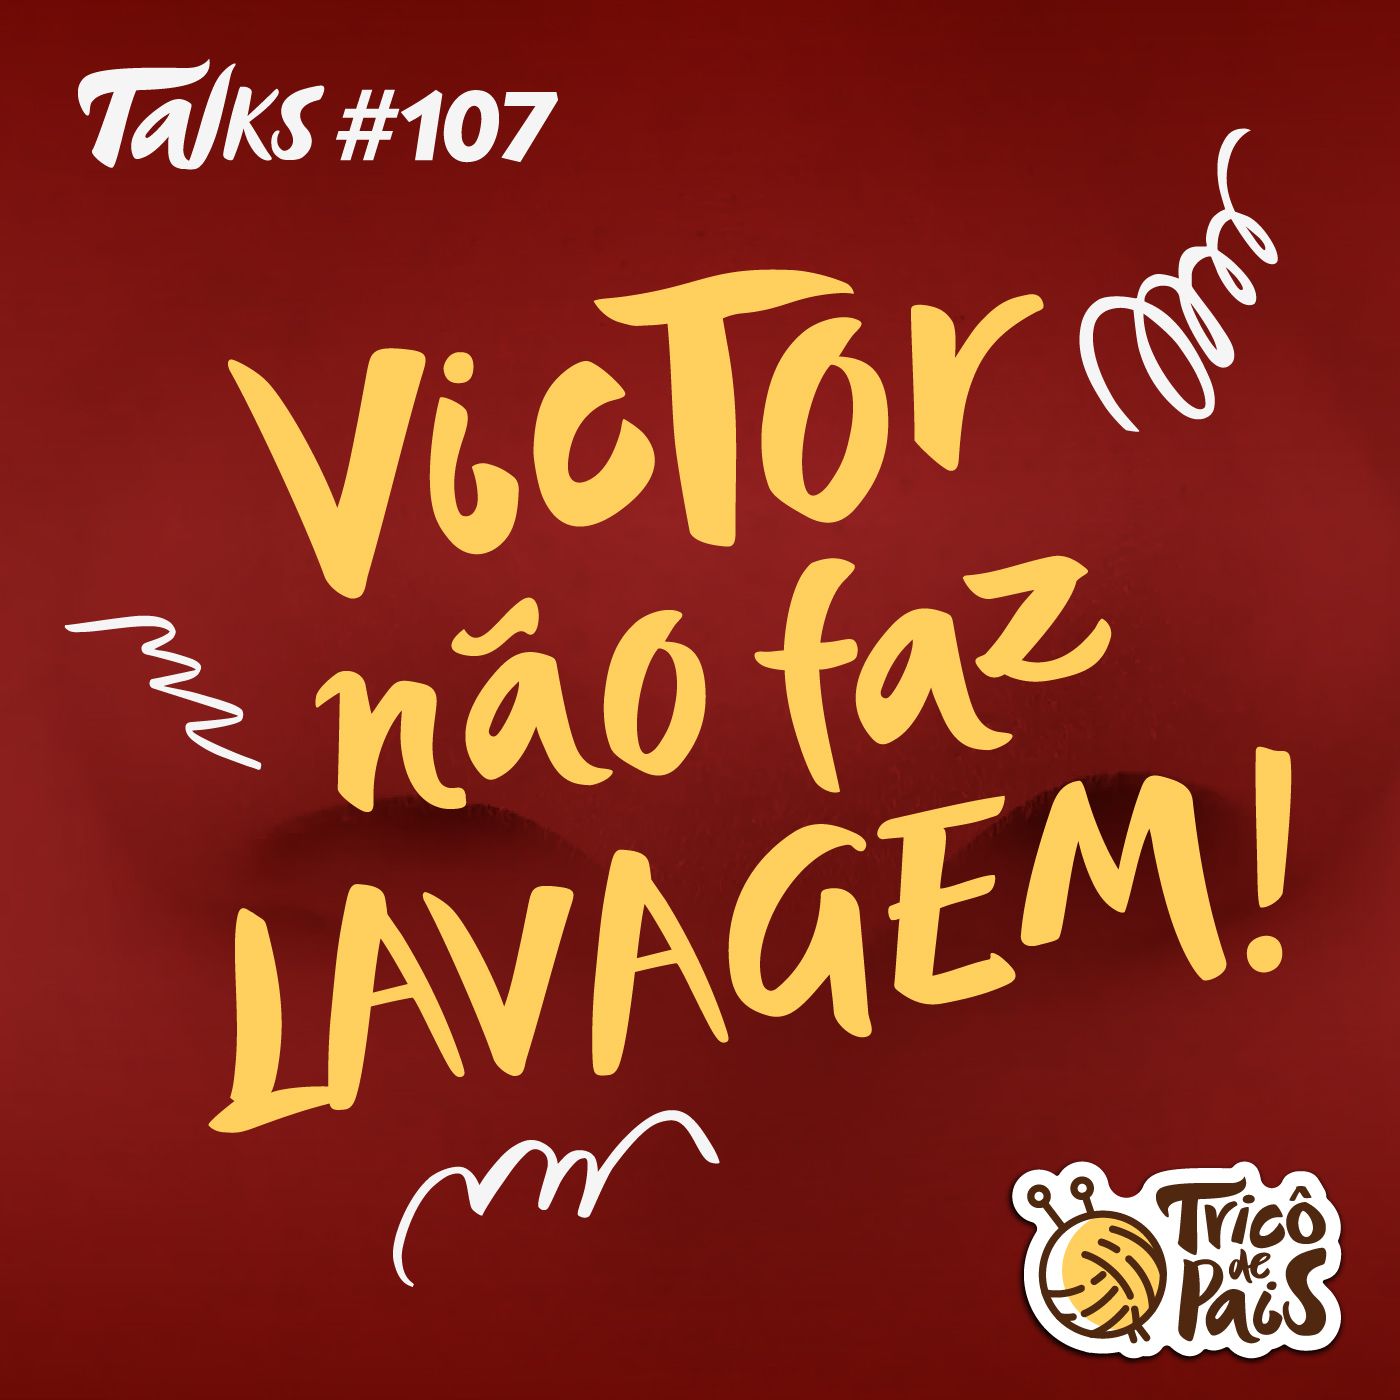 Tricô Talks 107 - Victor Não Faz Lavagem